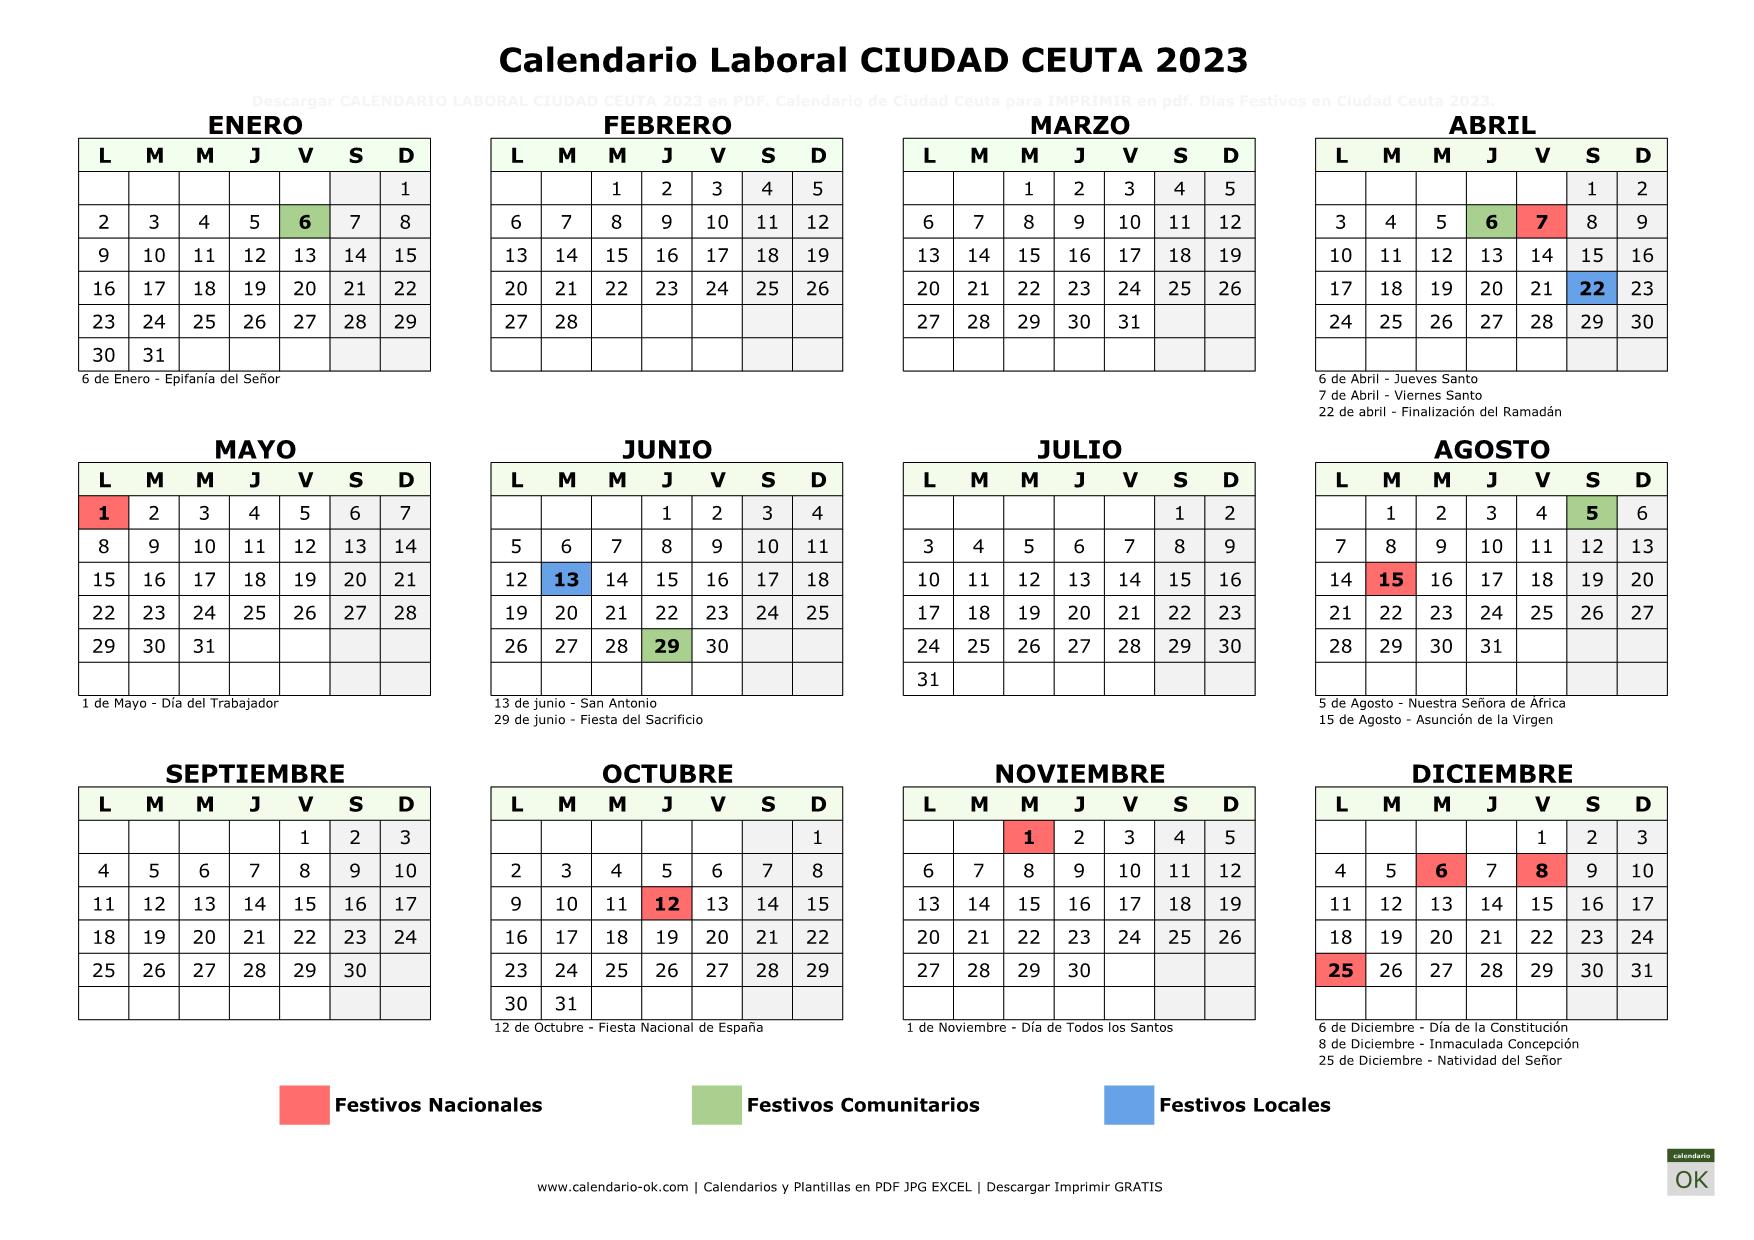 Calendario Laboral CEUTA 2023 horizontal